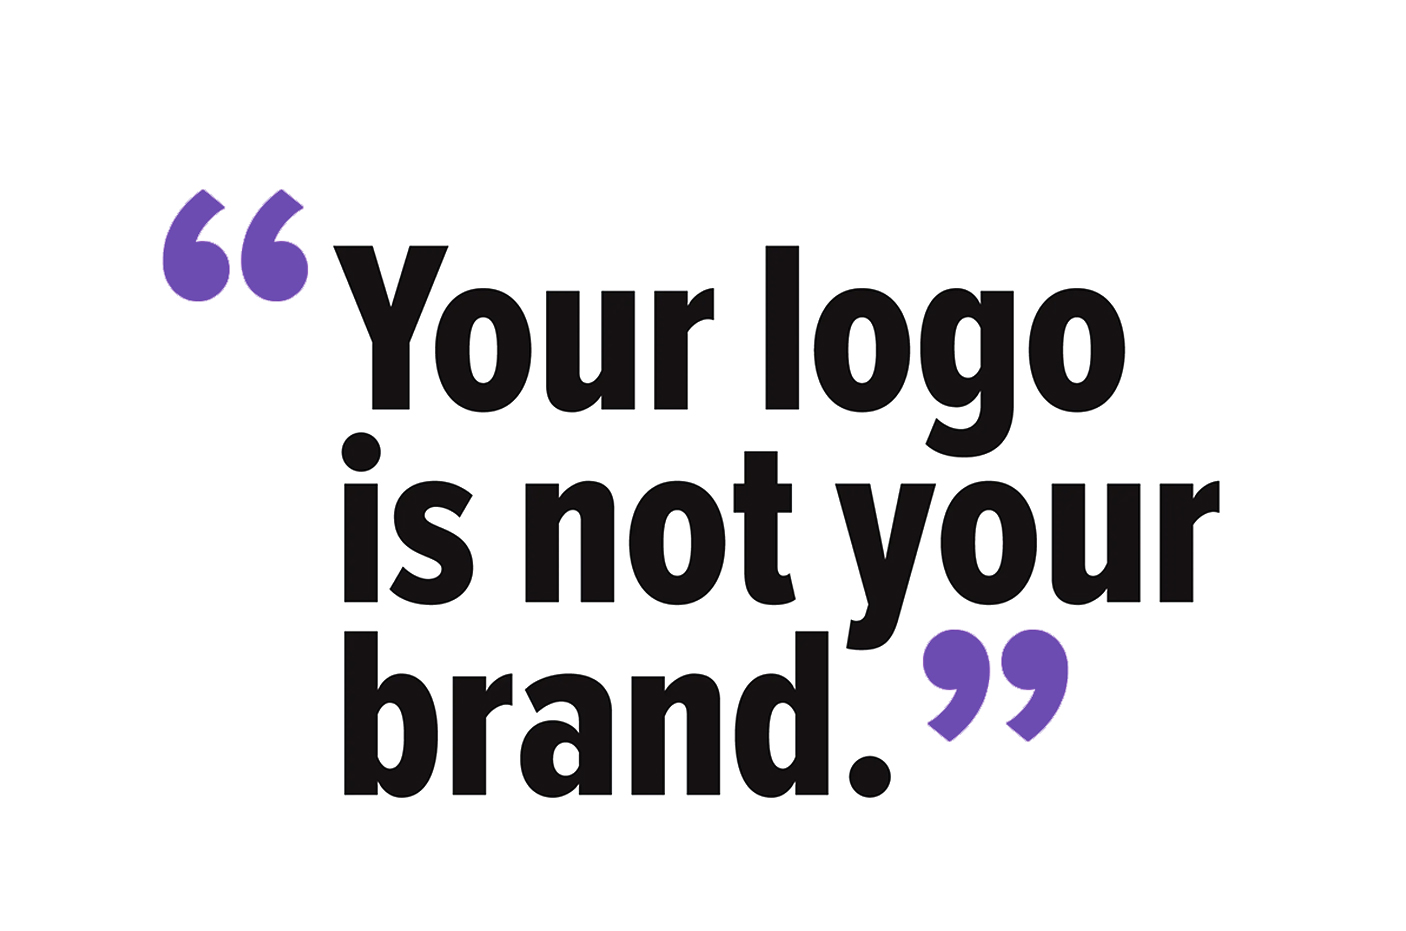 A logo is not branding